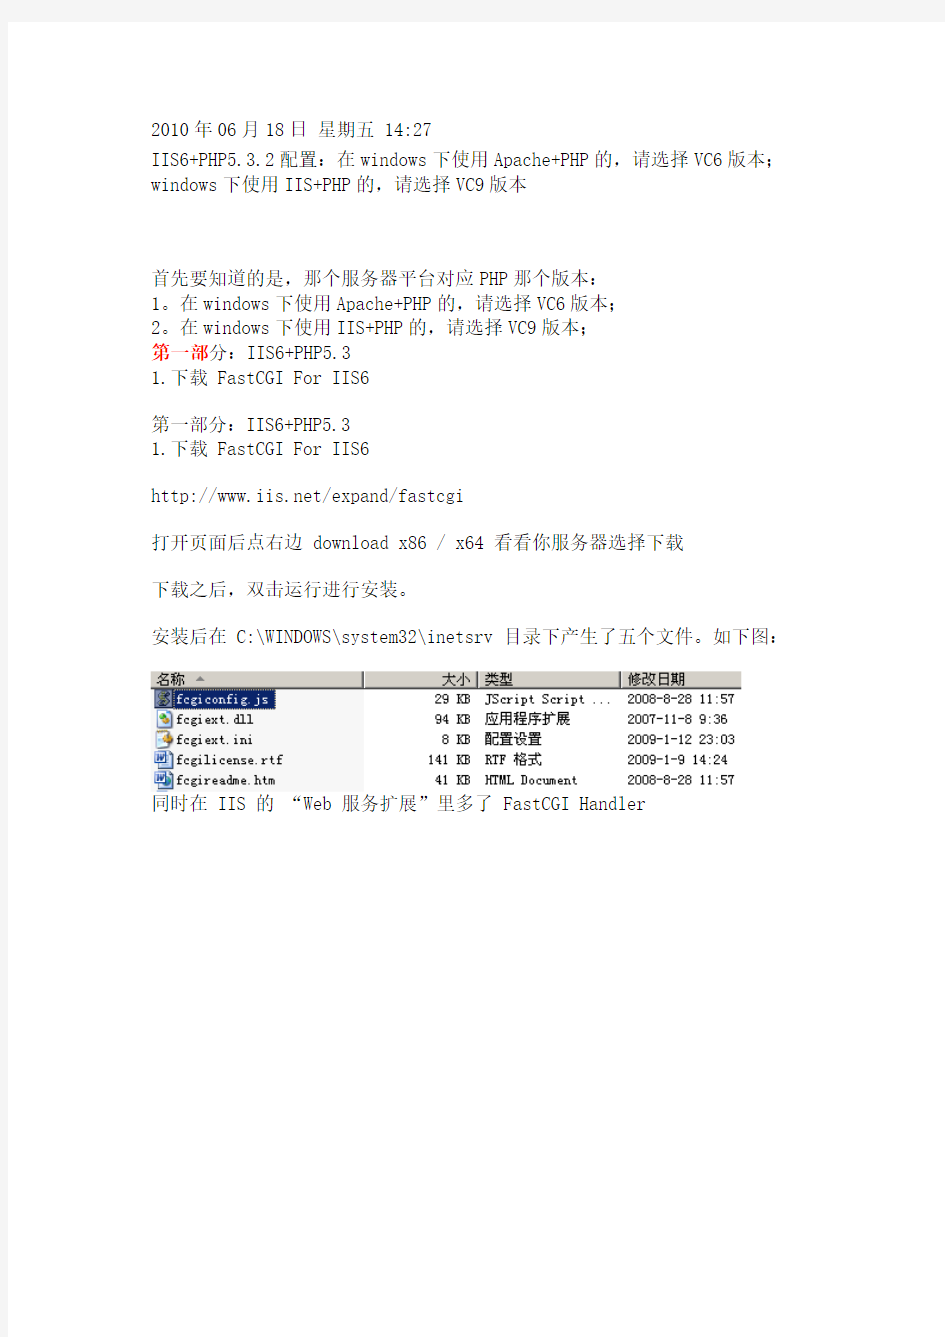 Win2003服务器iis6[1].0环境下php5.3.2安装配置教程图解(1)